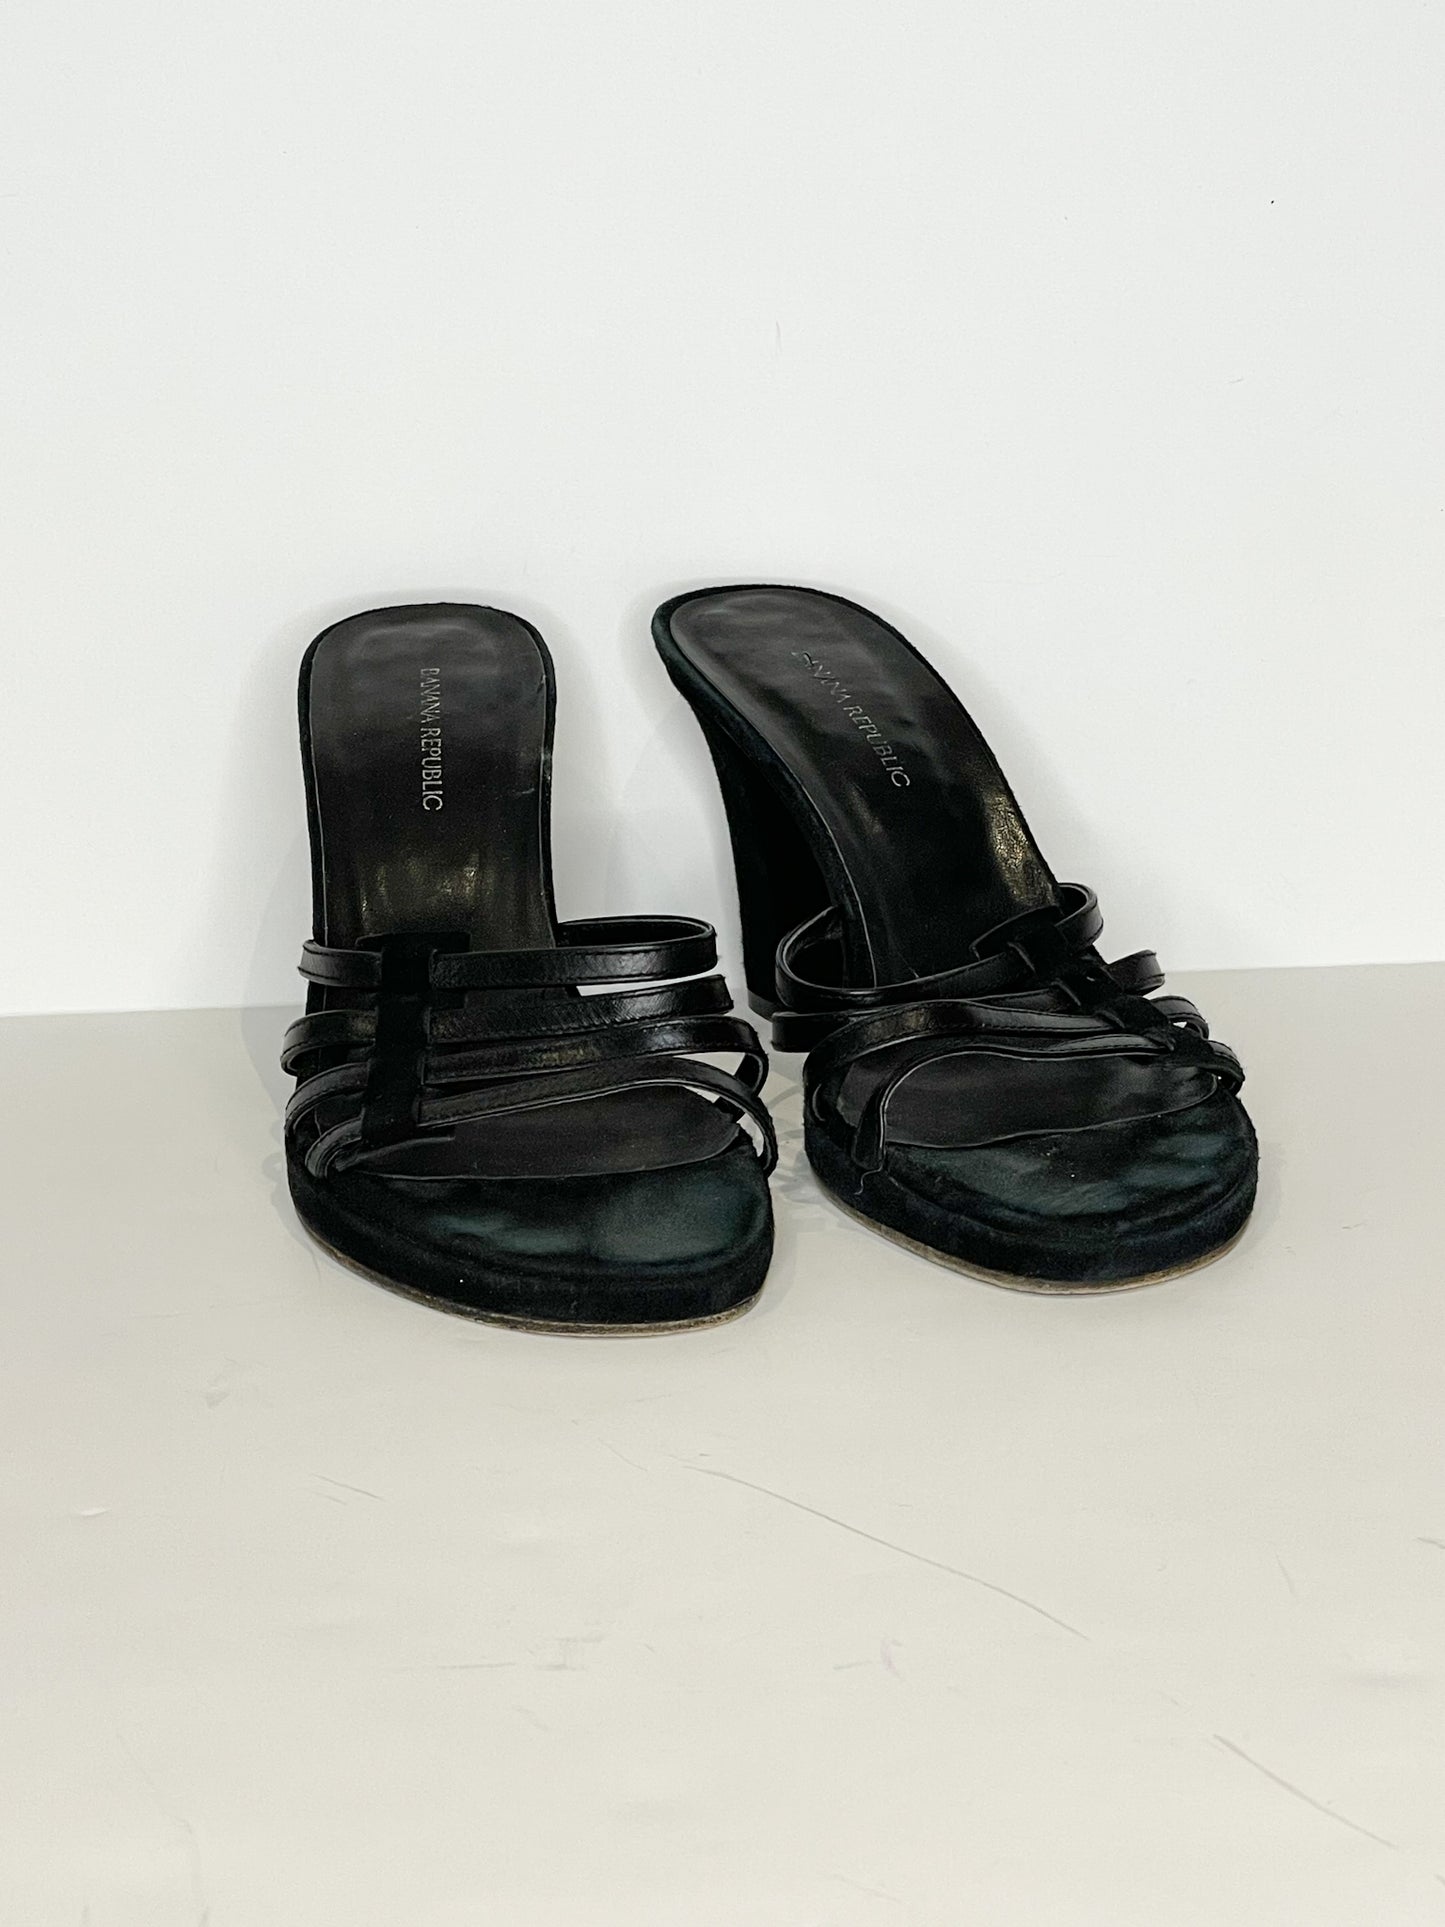 Banana Republic Black Genuine Suede Sandal Strappy Slide On 3.5" Heels - Size 7.5